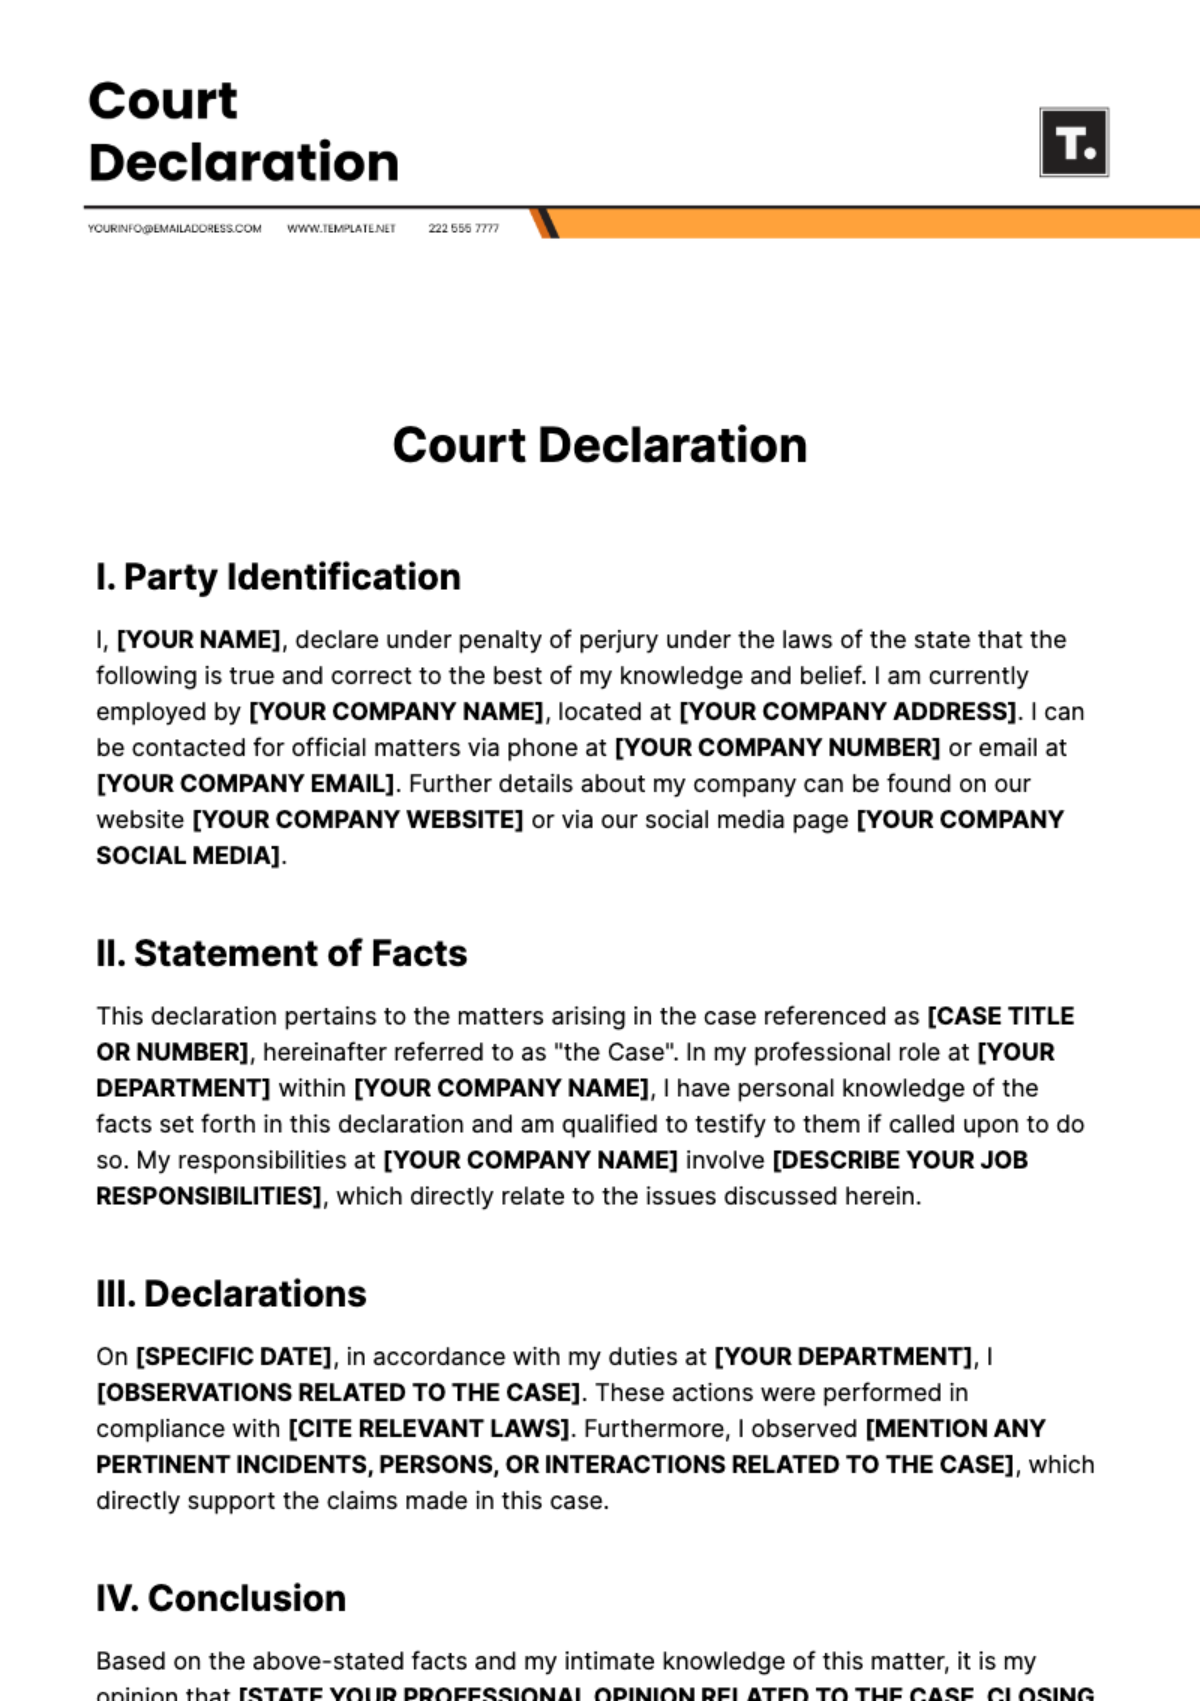 Court Declaration Template